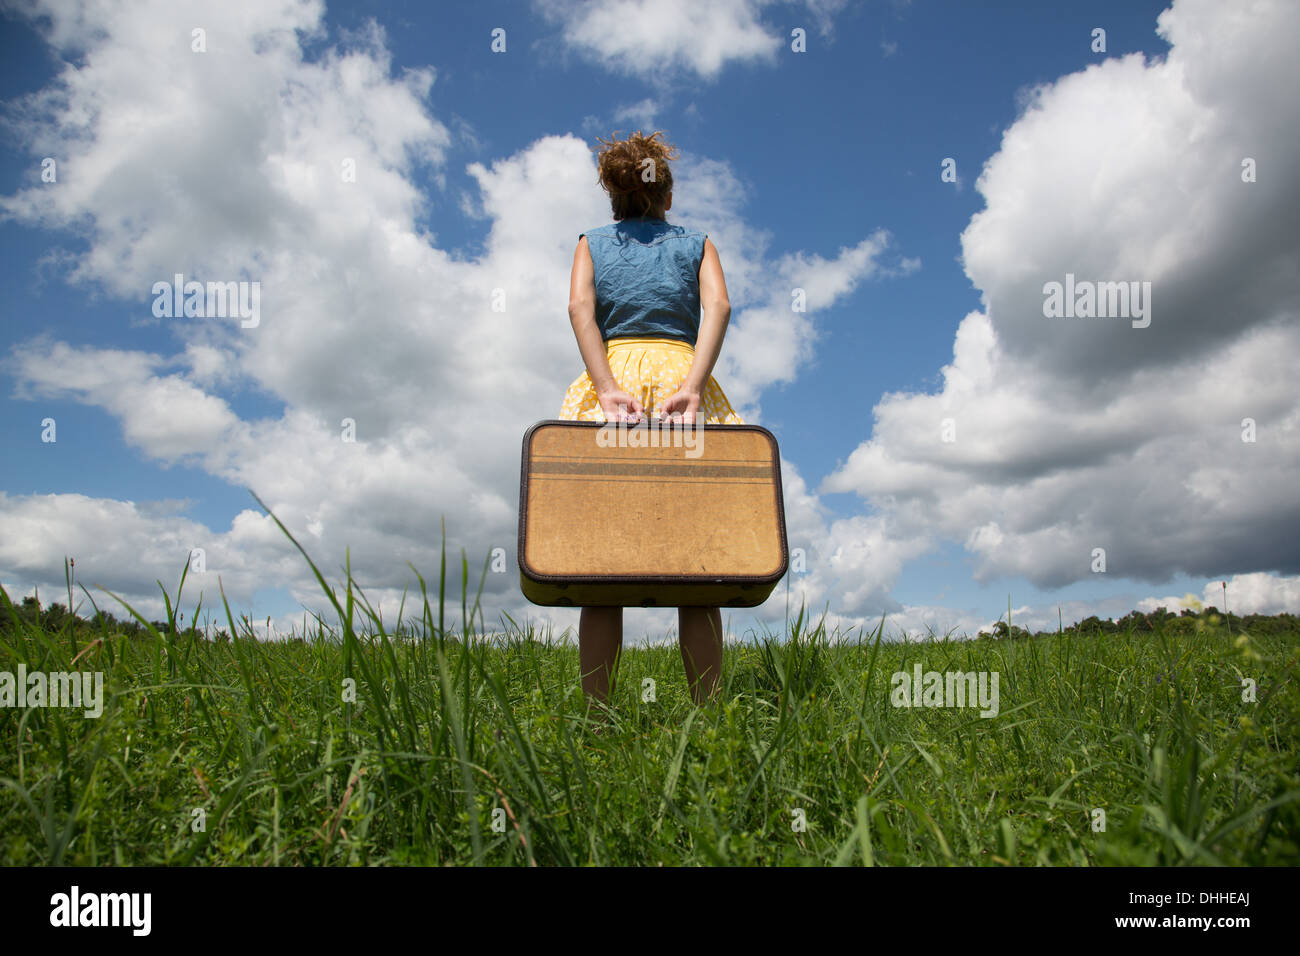 Teenager-Mädchen mit Koffer in Feld Stockfotografie - Alamy